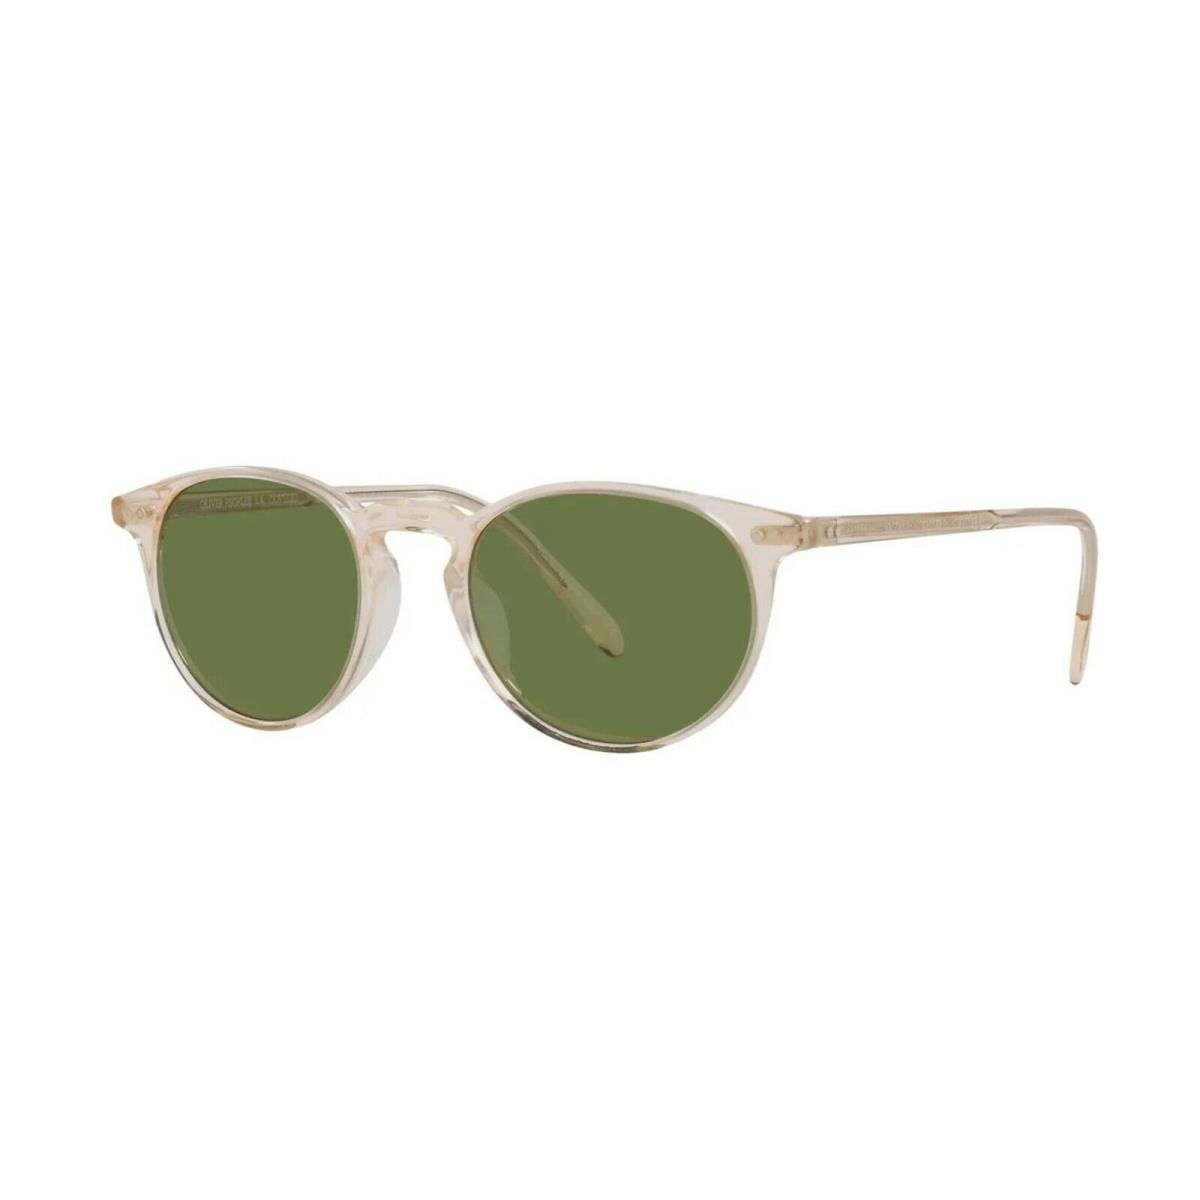 Oliver Peoples Riley Sun 5004SU Buff/green C 1094/52 Sunglasses - Frame: Buff, Lens: Green C